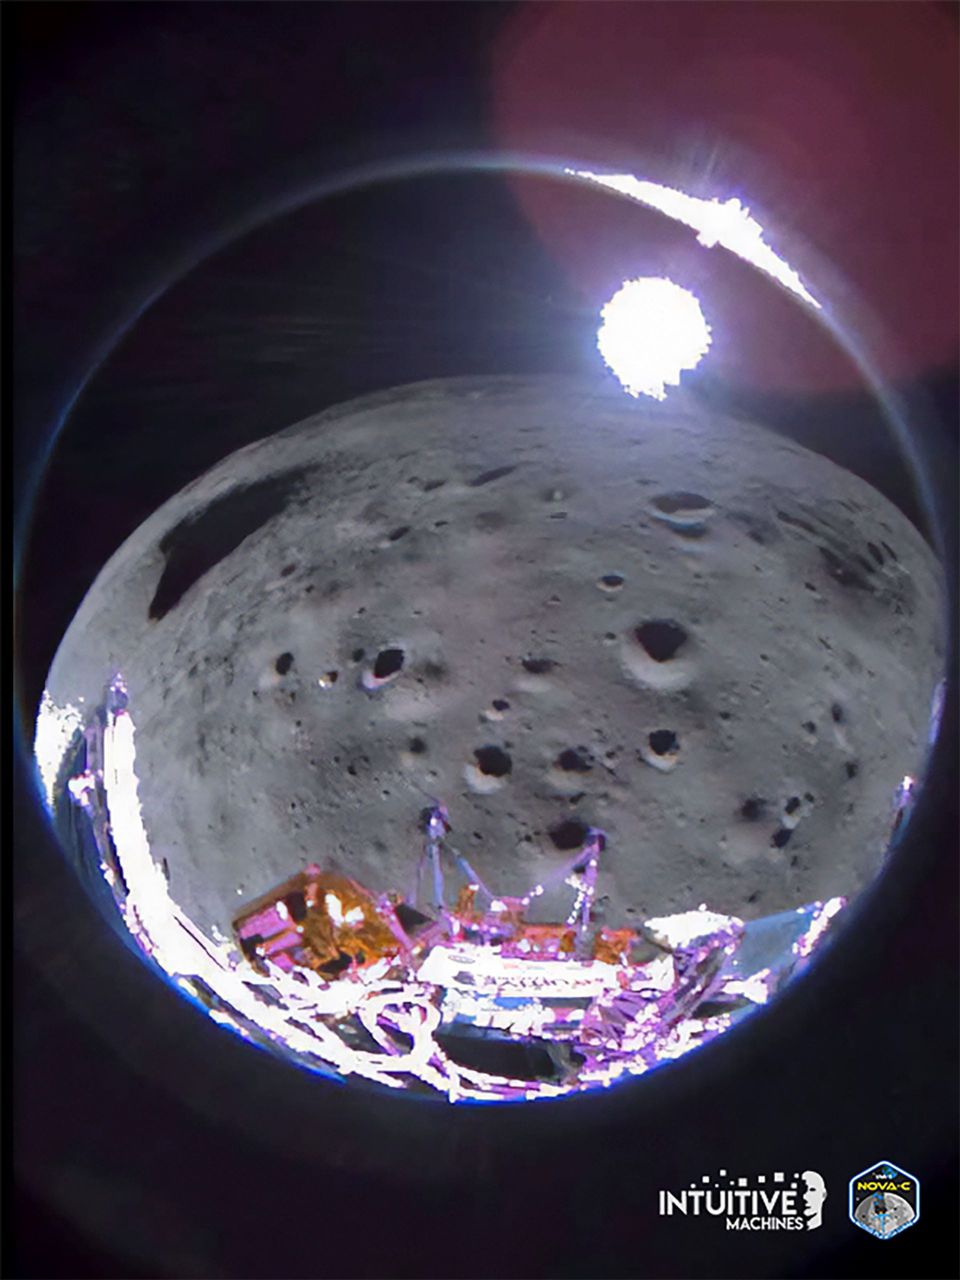 Sideways moon landing cuts mission short, private lunar lander expected